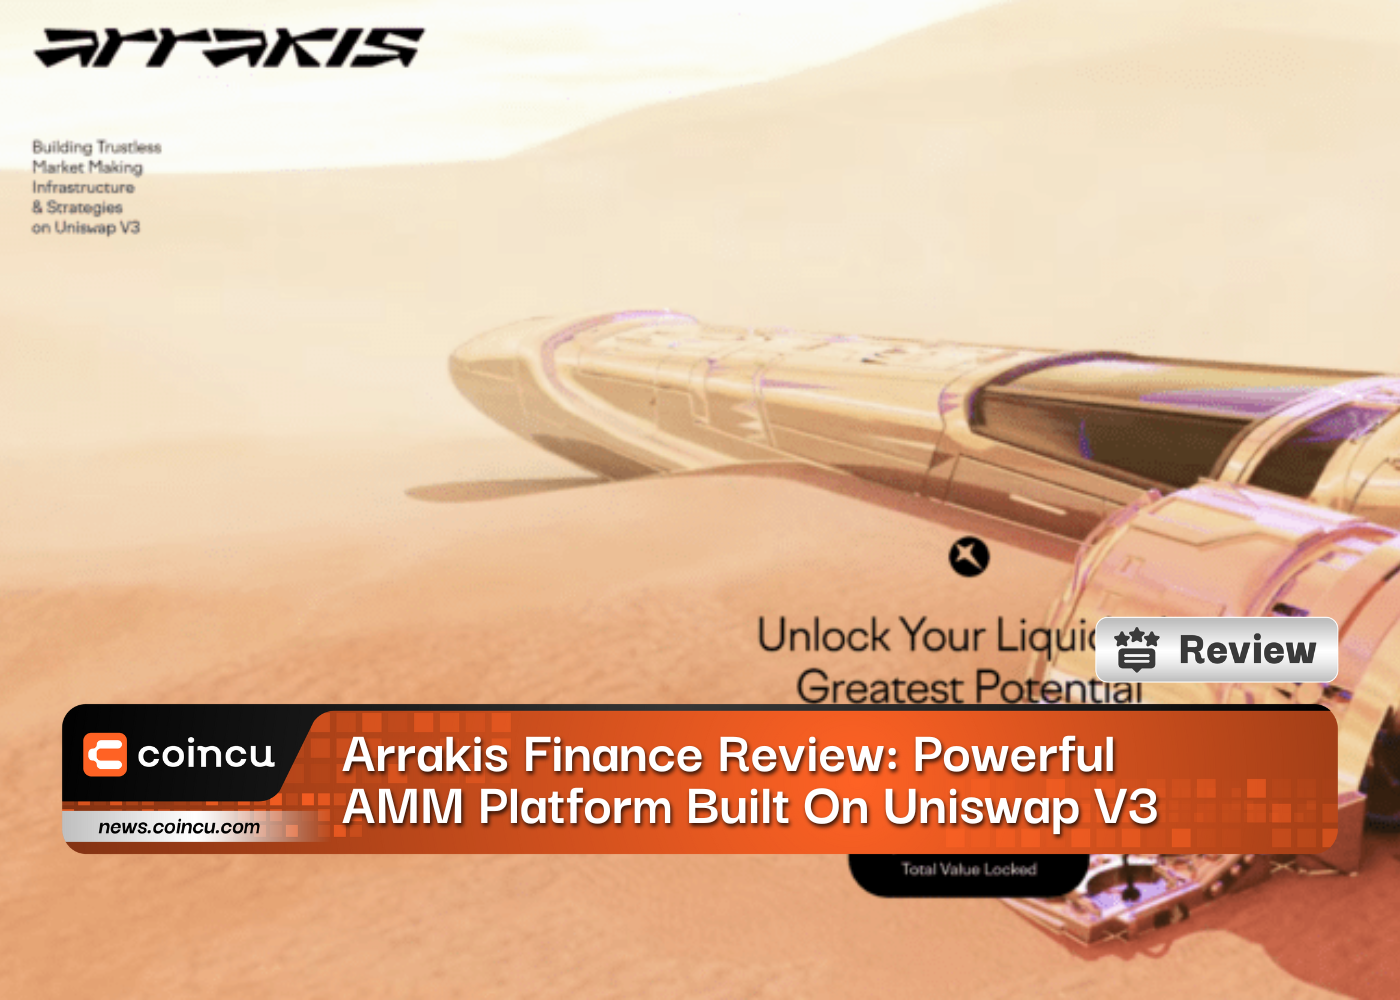 Arrakis Finance Review: Powerful AMM Platform Built On Uniswap V3